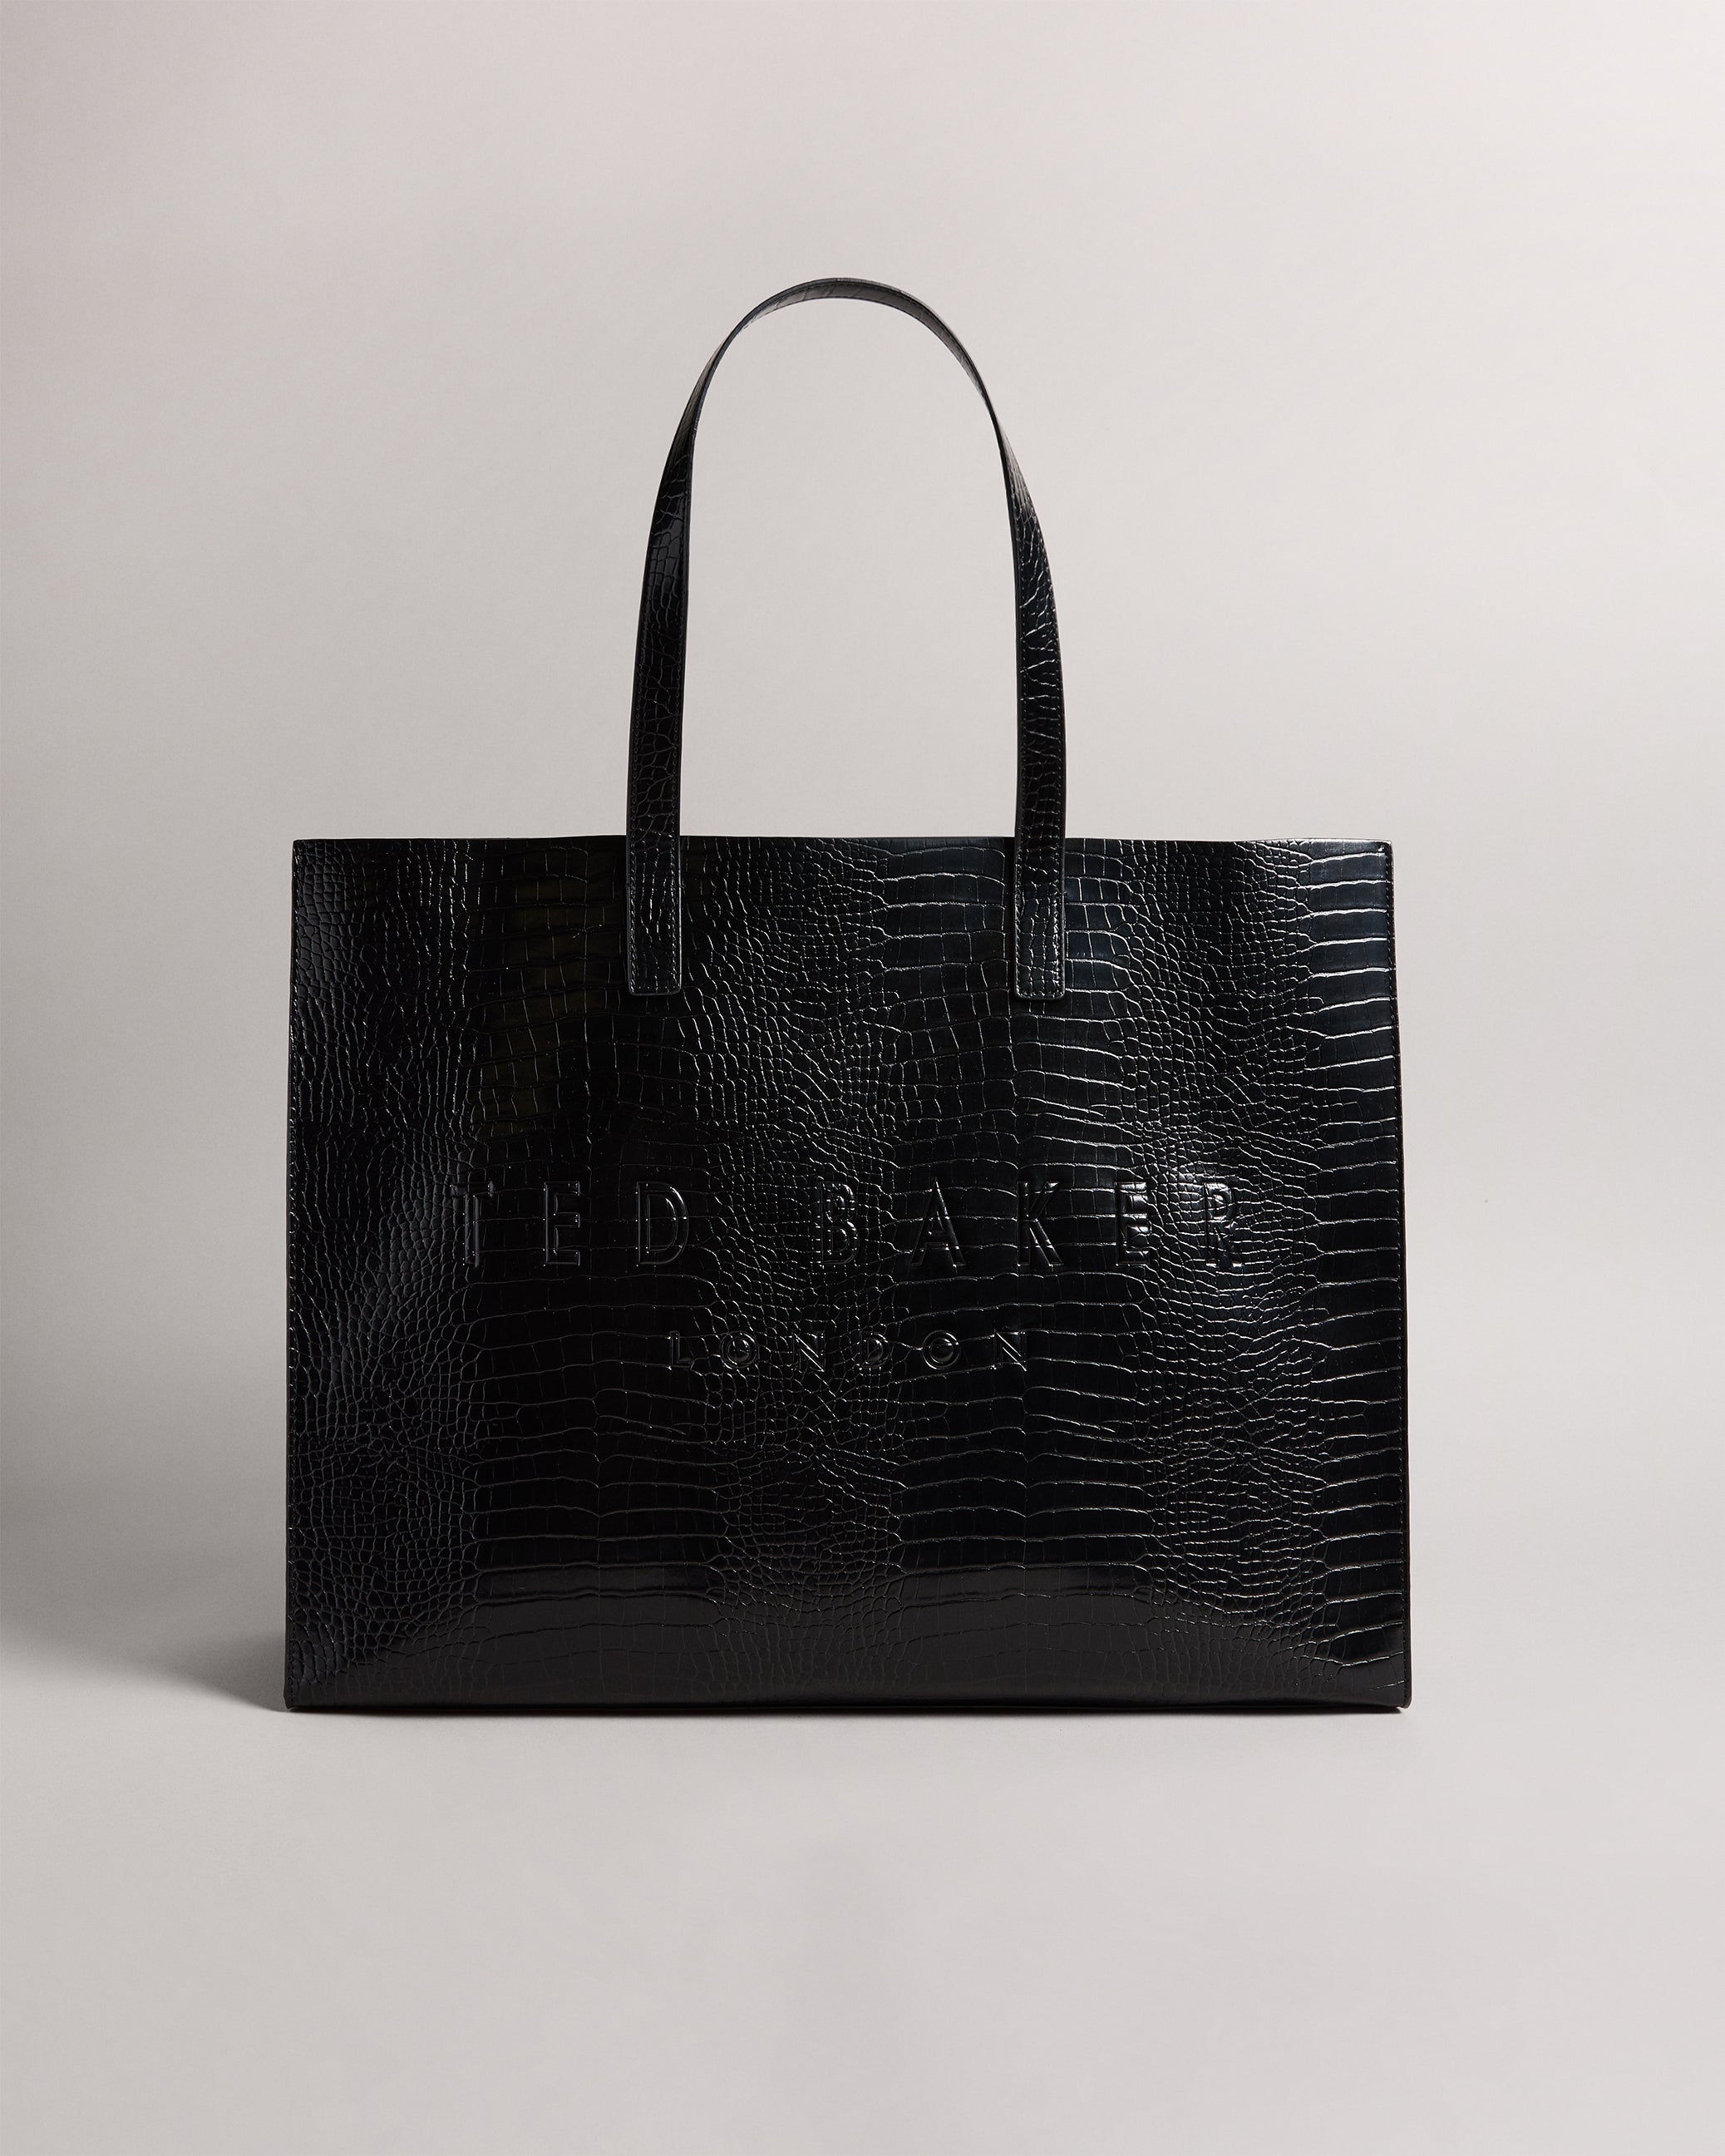 Fashion House Amman - Yves Saint Laurent Bag 🔥 On Sale ——— Shop Designer  Brands Online & In-Store www.fashionhouseamman.com ☎️0795324199 ——— |  Facebook